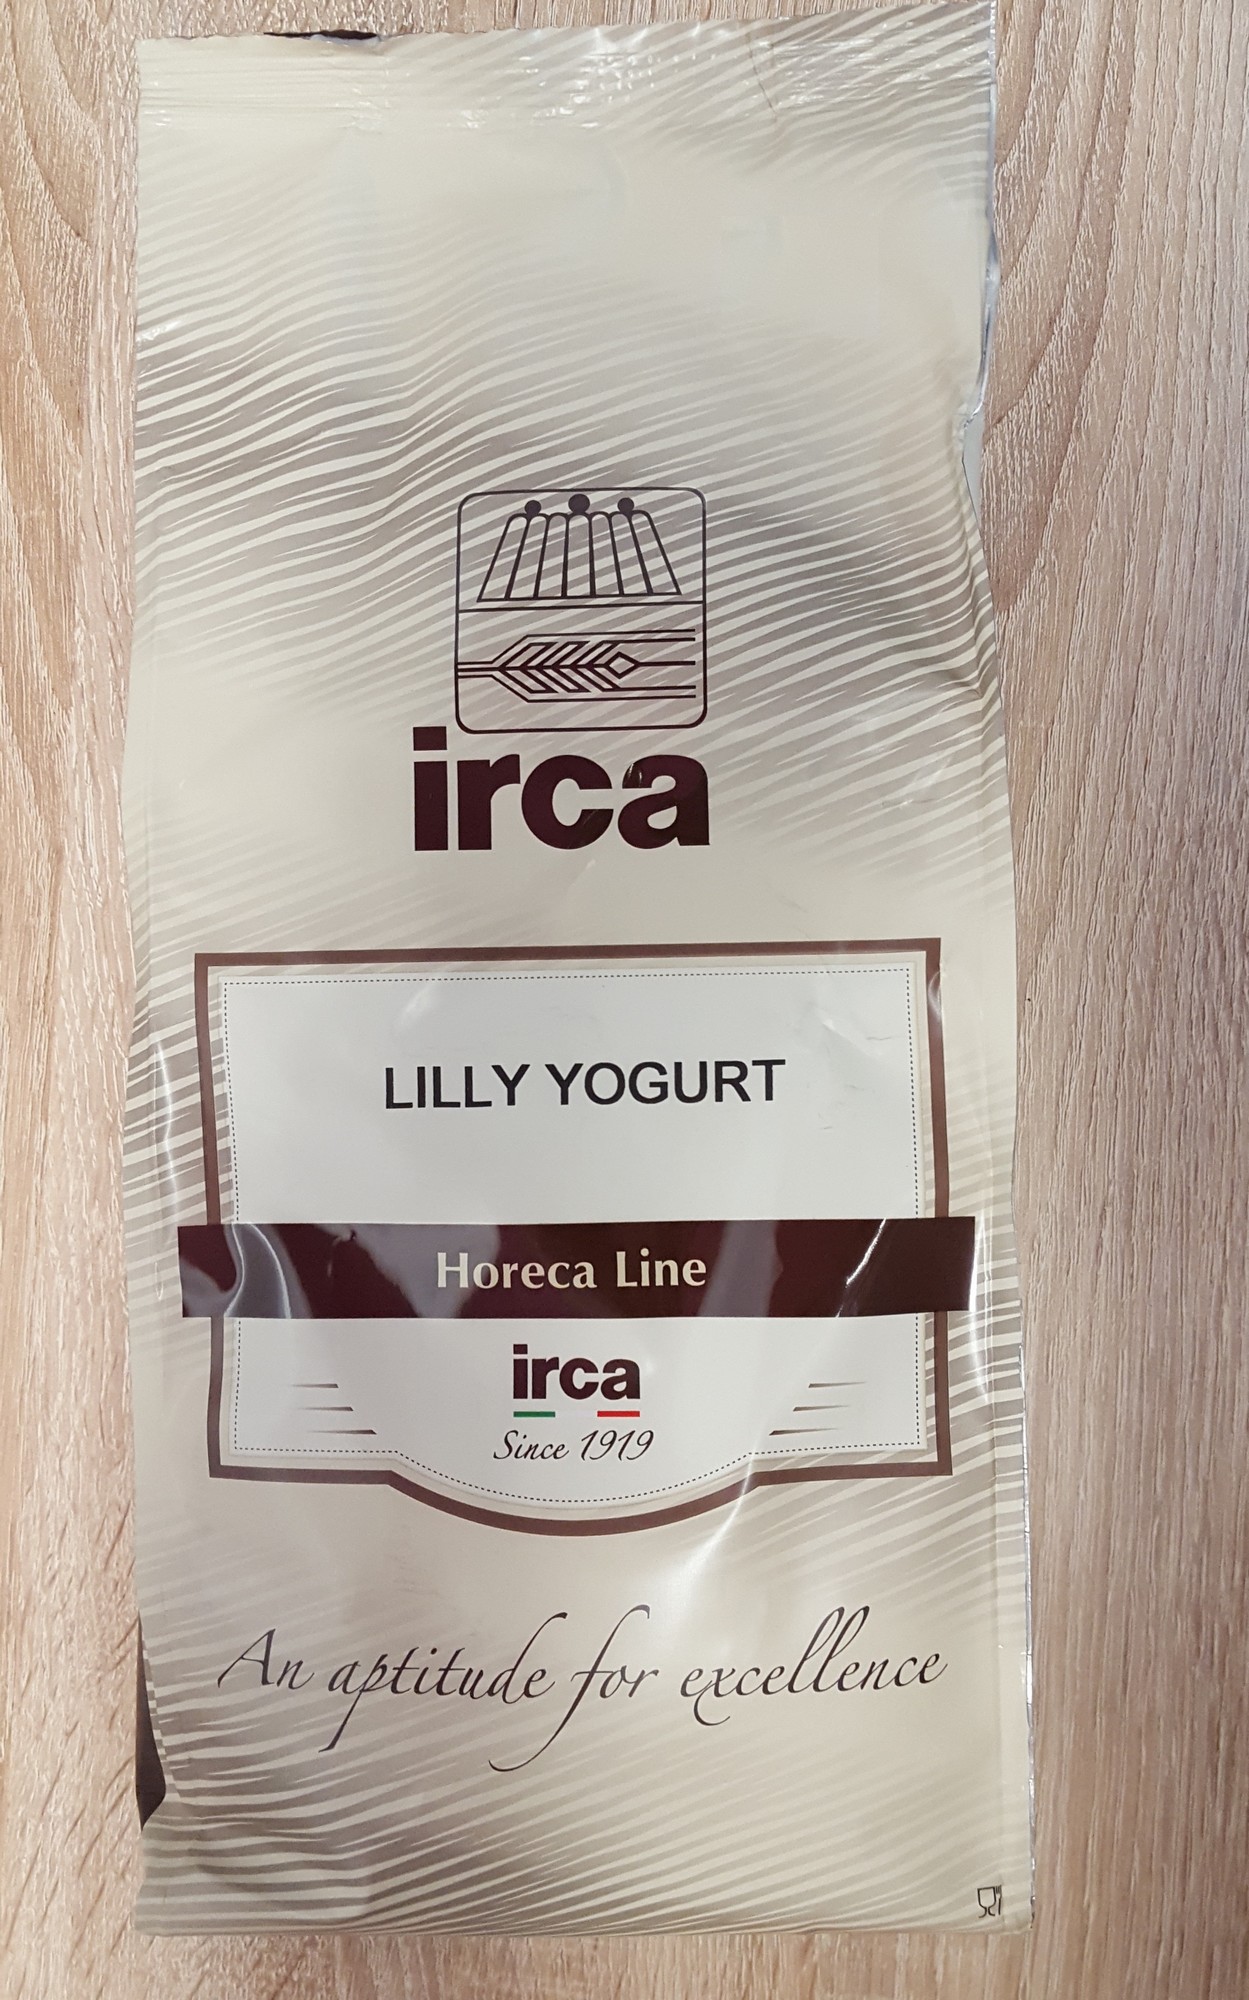 Lilly yogurt 200g